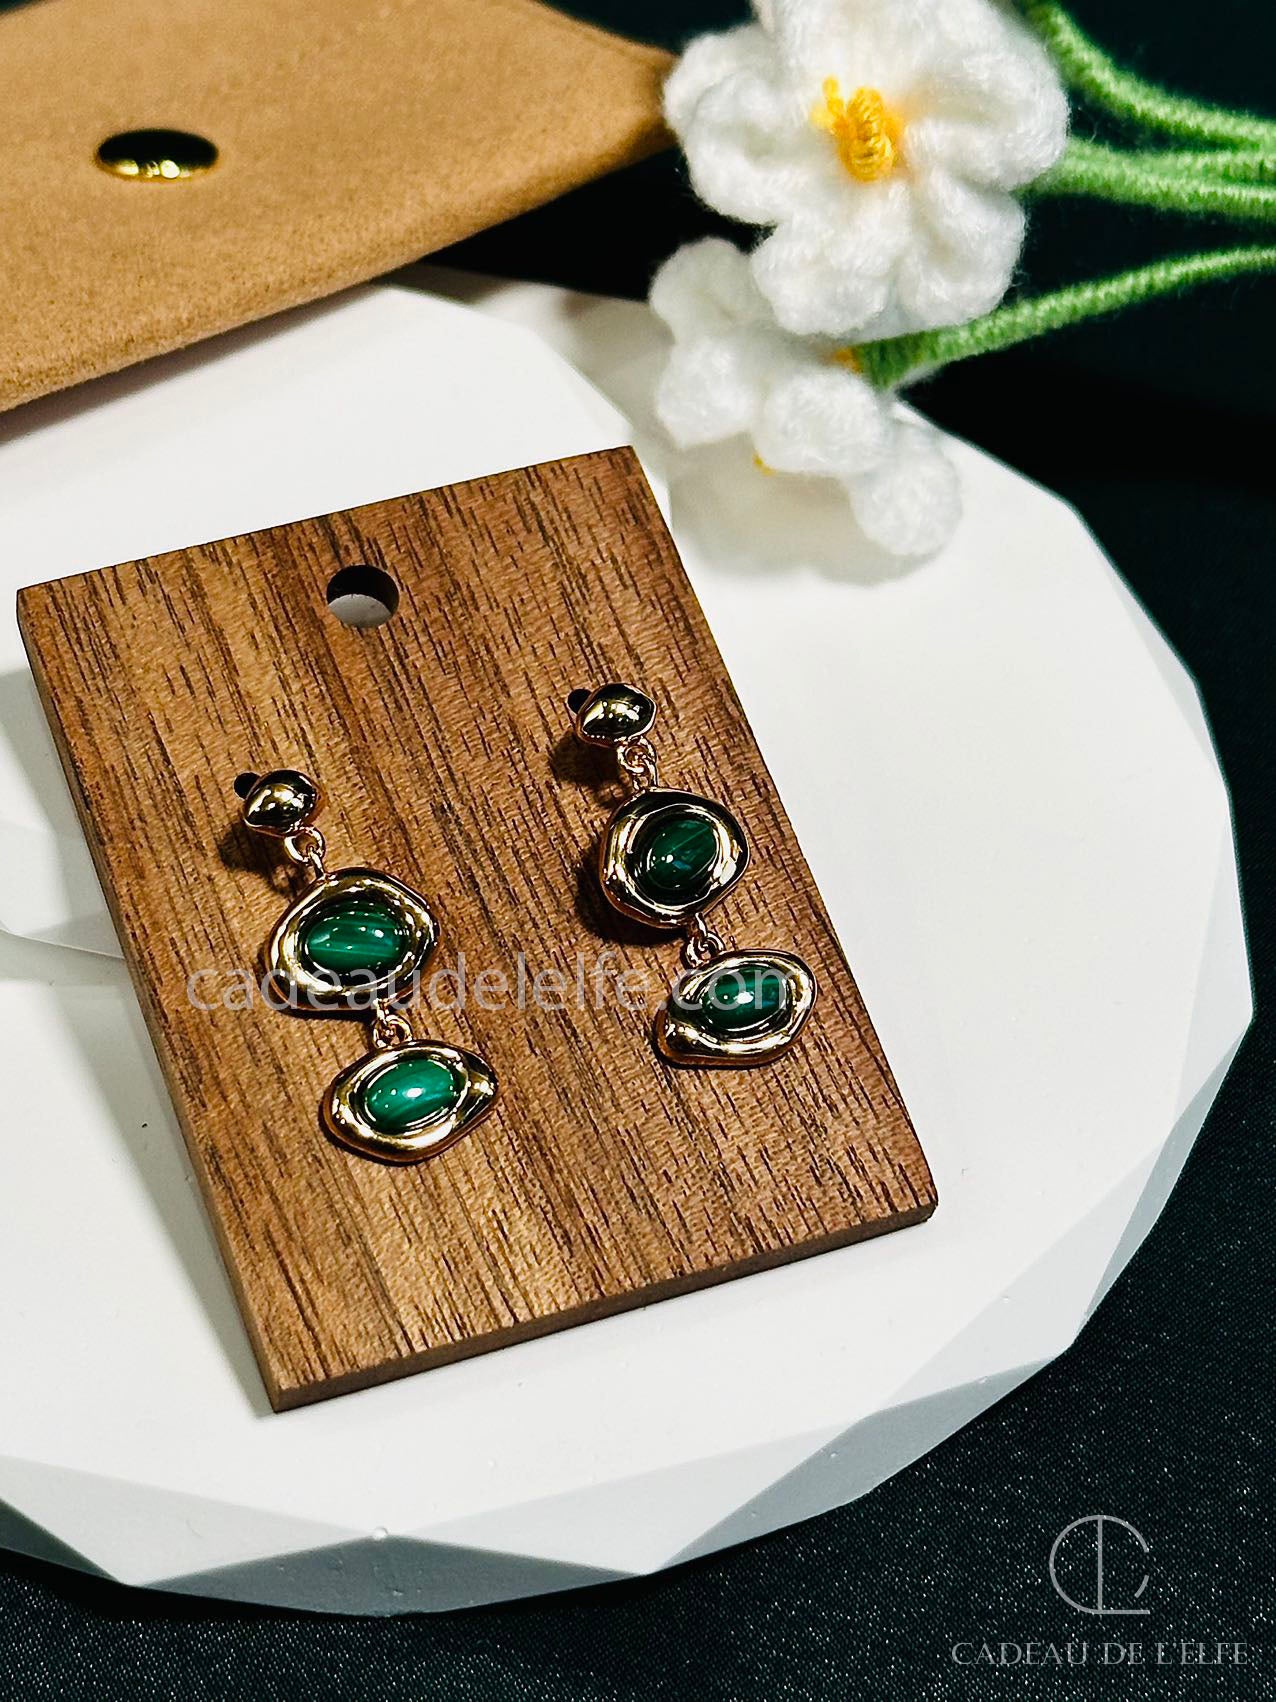 Peacock stone earrings